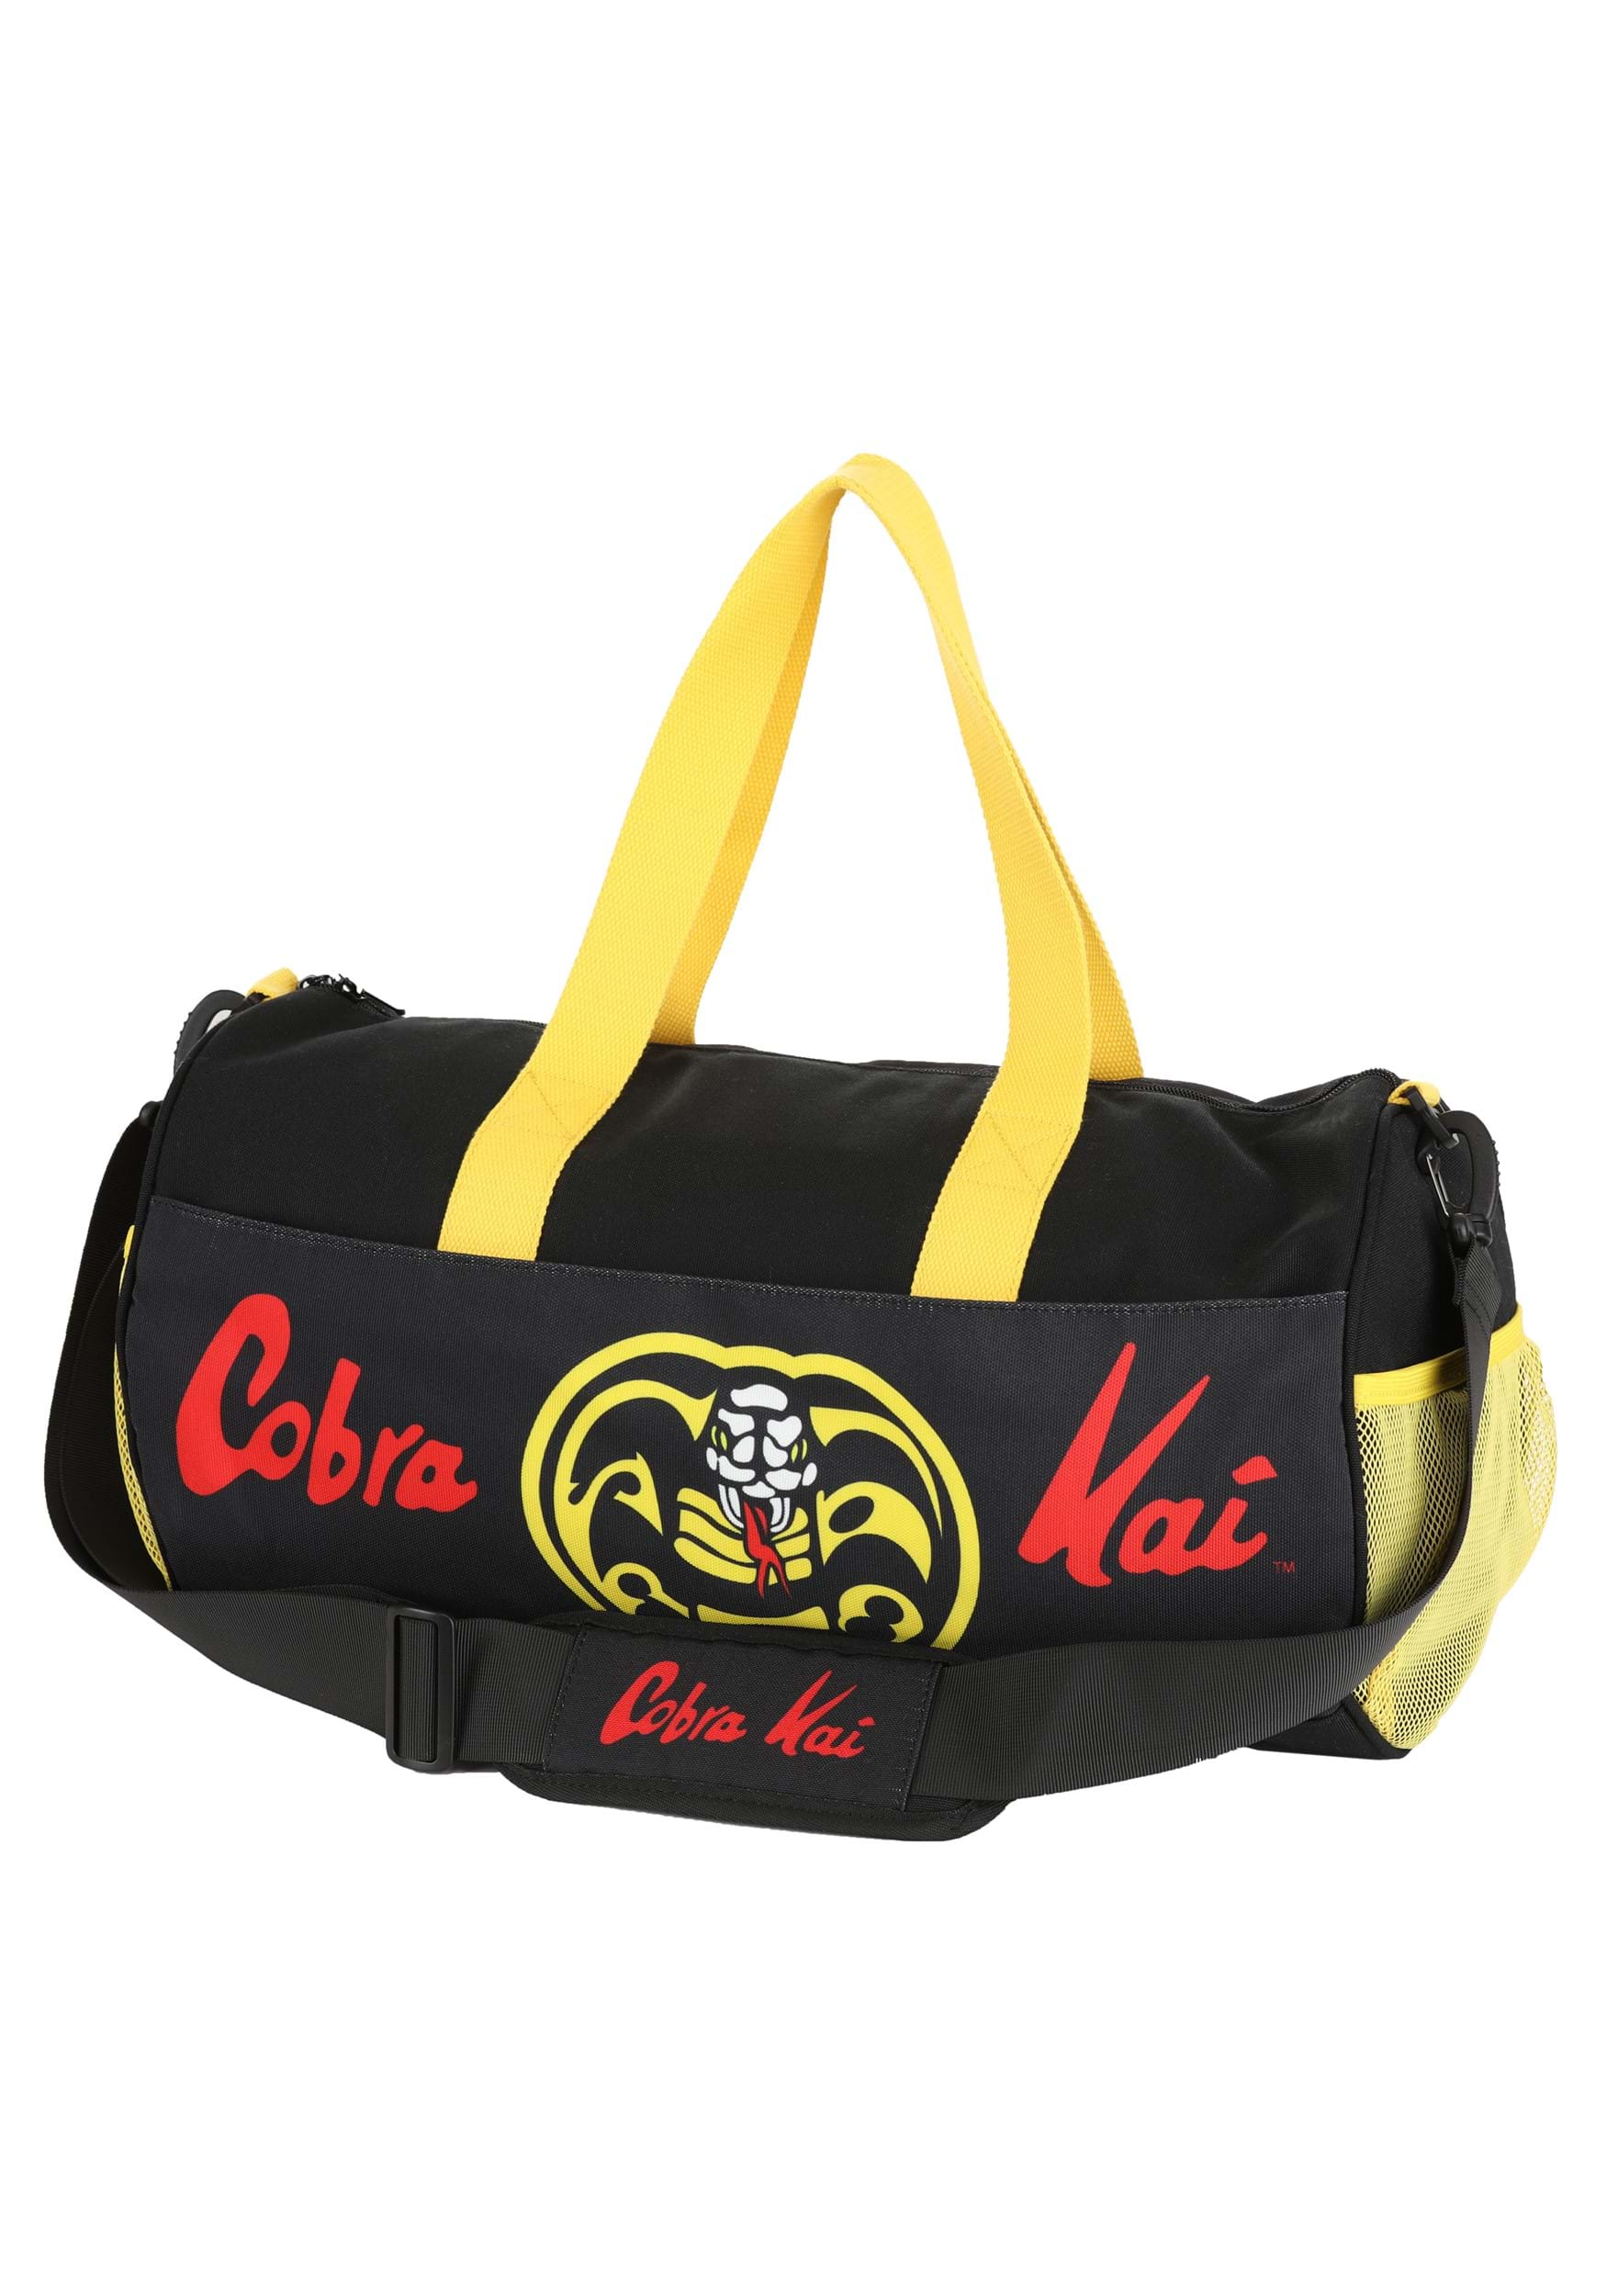 Cobra Kai Black Strike First Duffle Bag , Cobra Kai Accessories